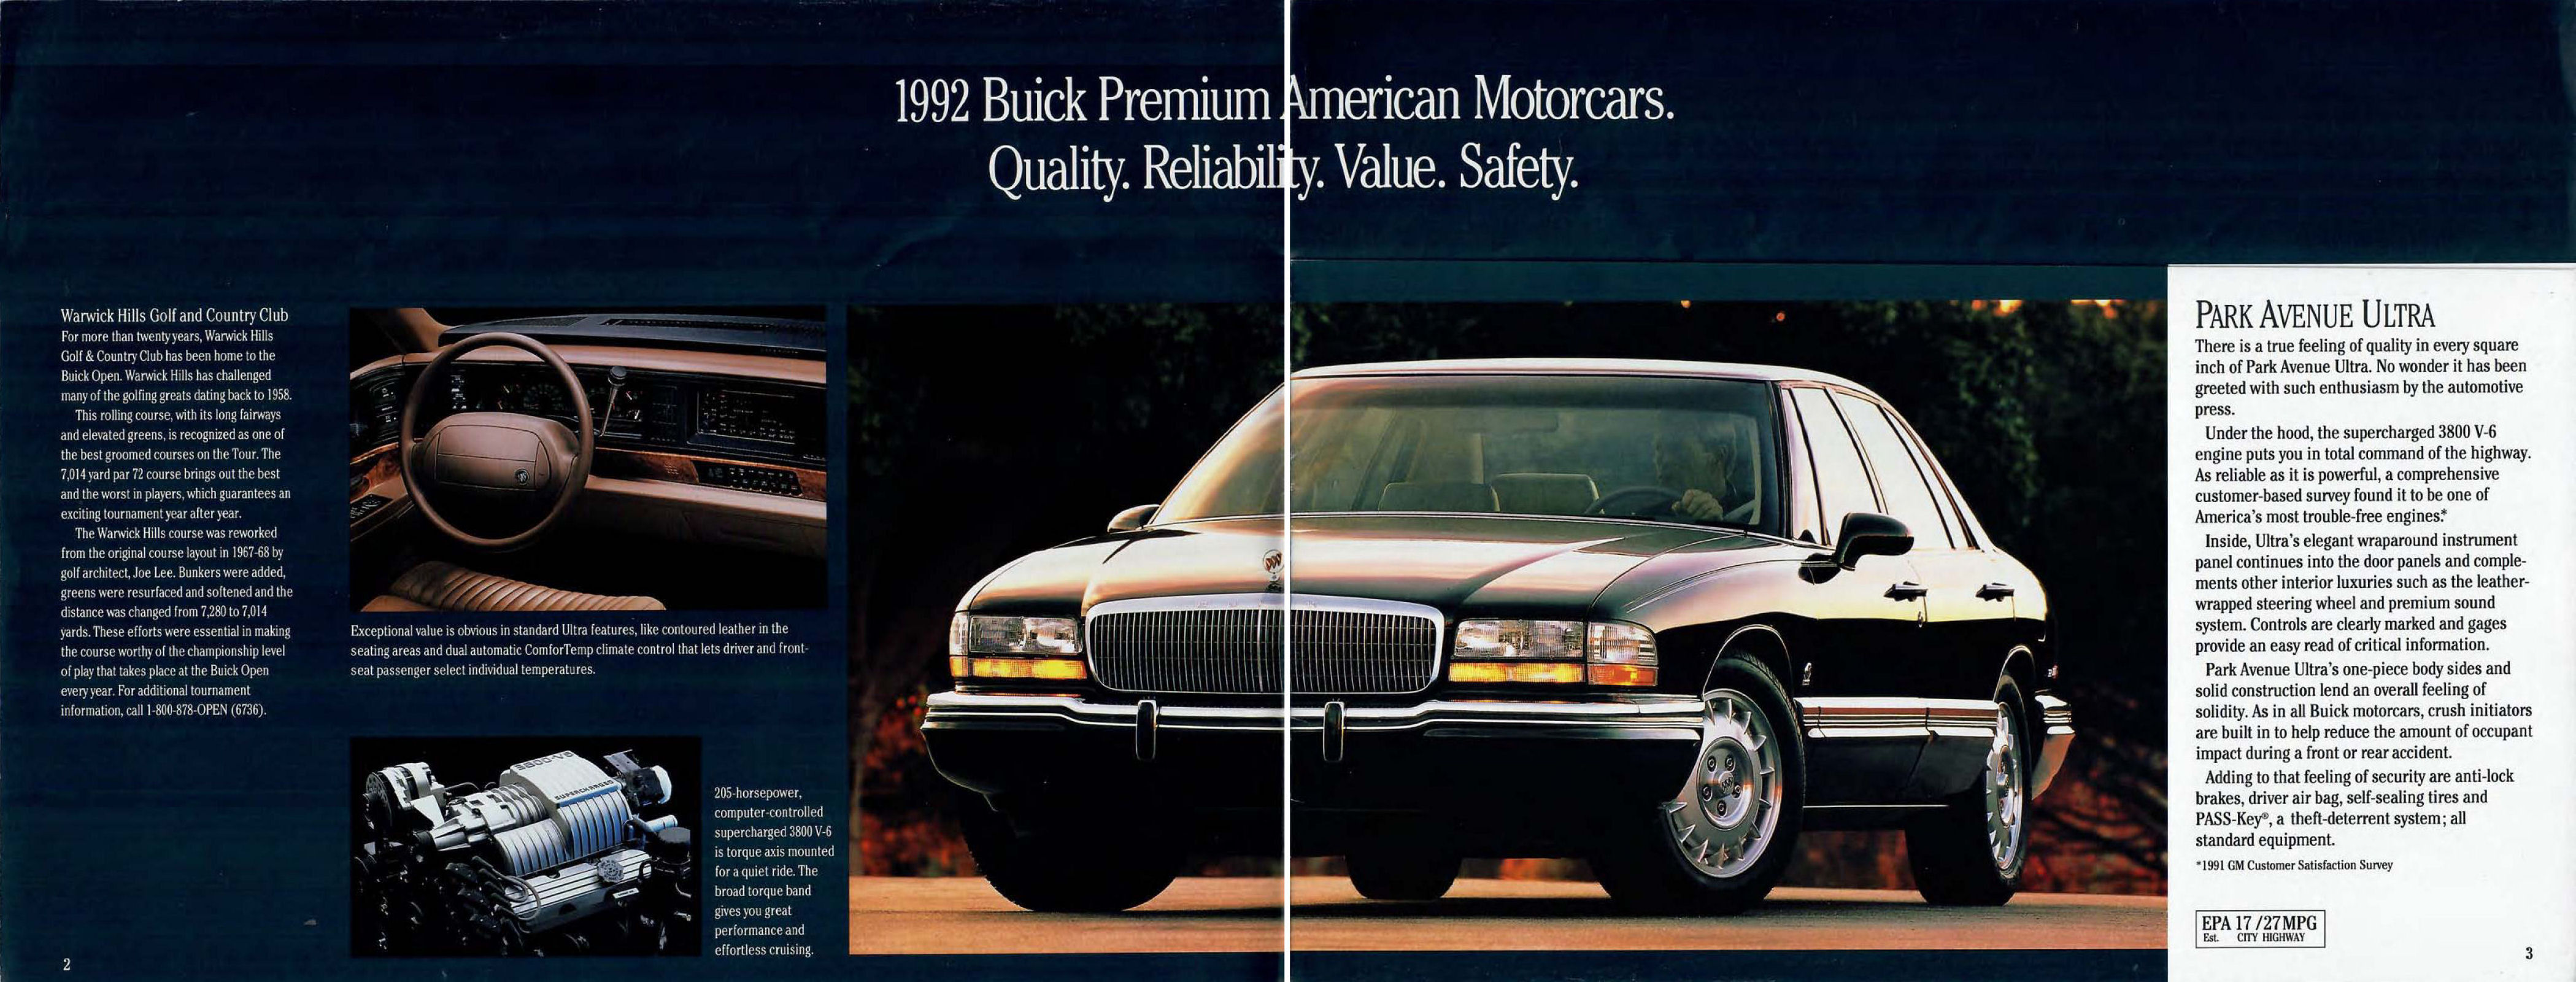 1992 Buick Full Line Handout-02-03